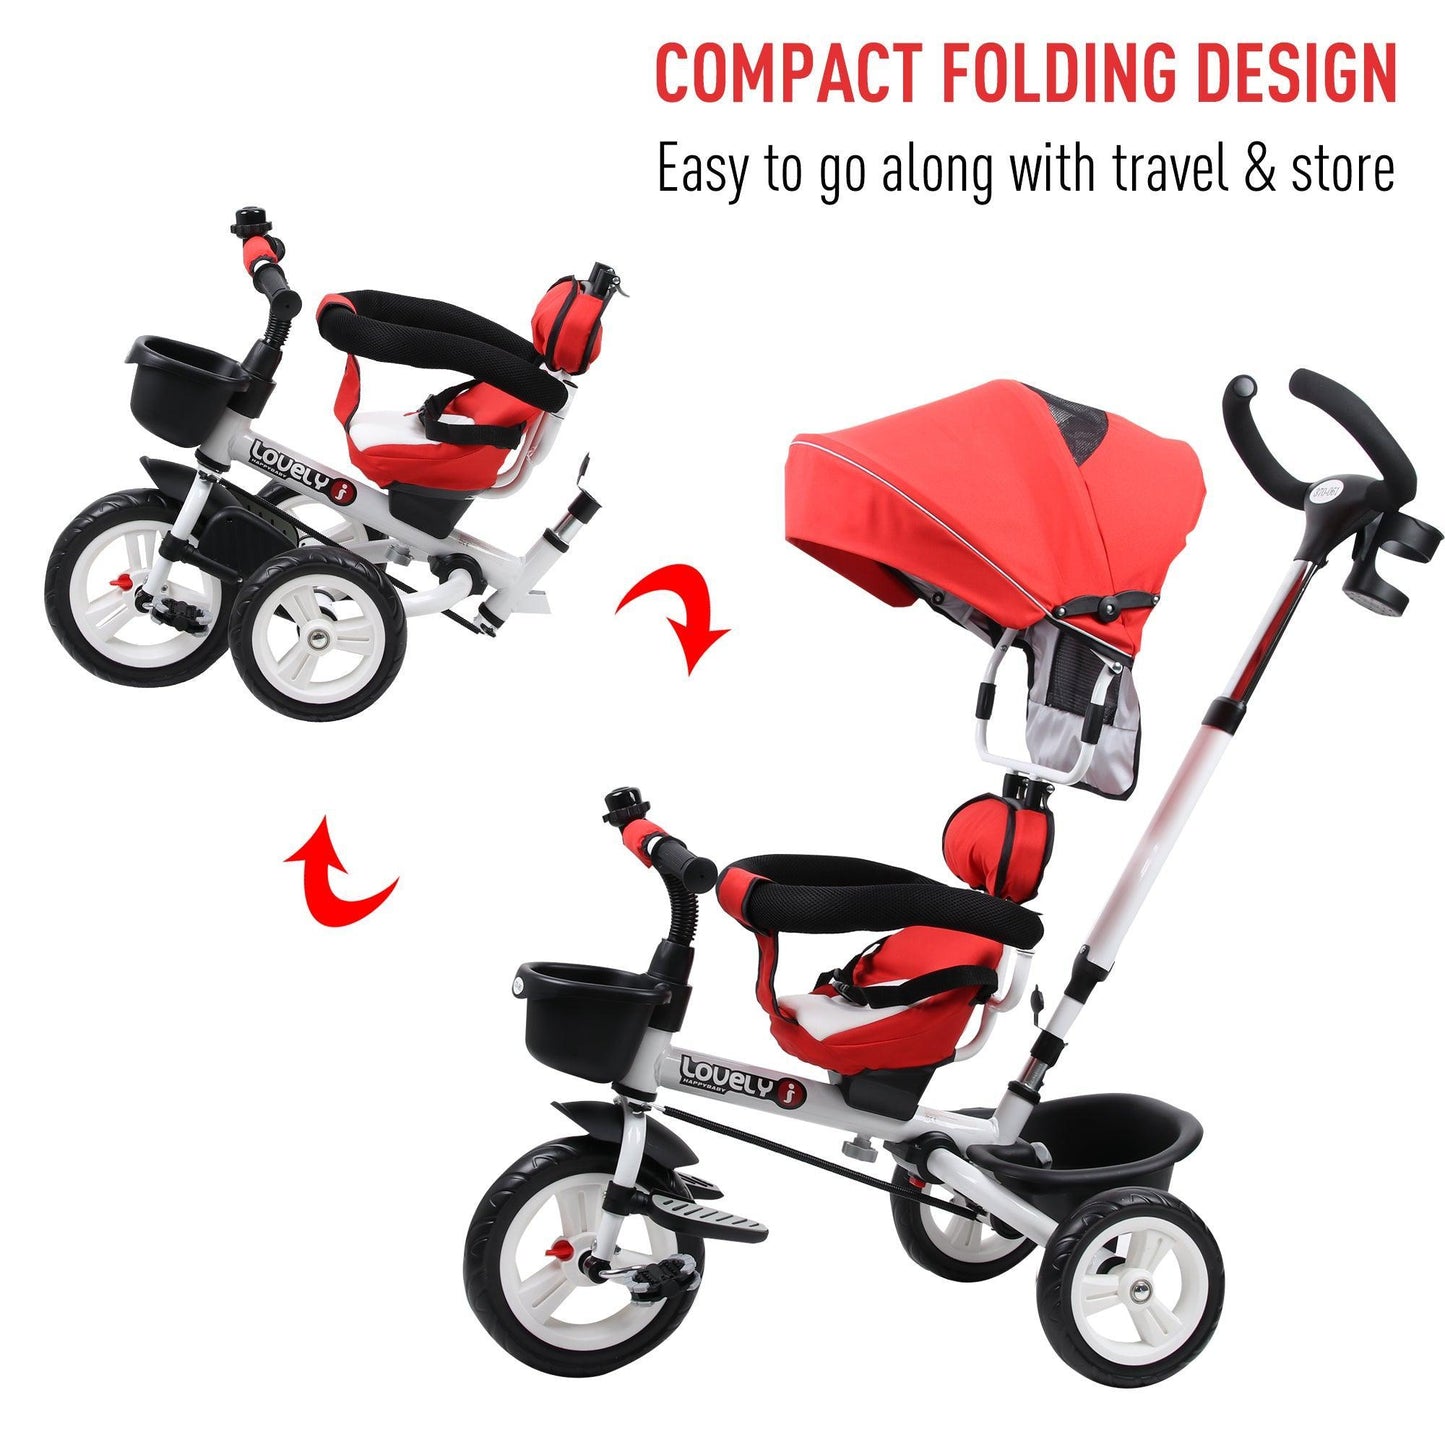 HOMCOM Kids Tricycle Stroller: 4-in-1, Red, Canopy - ALL4U RETAILER LTD